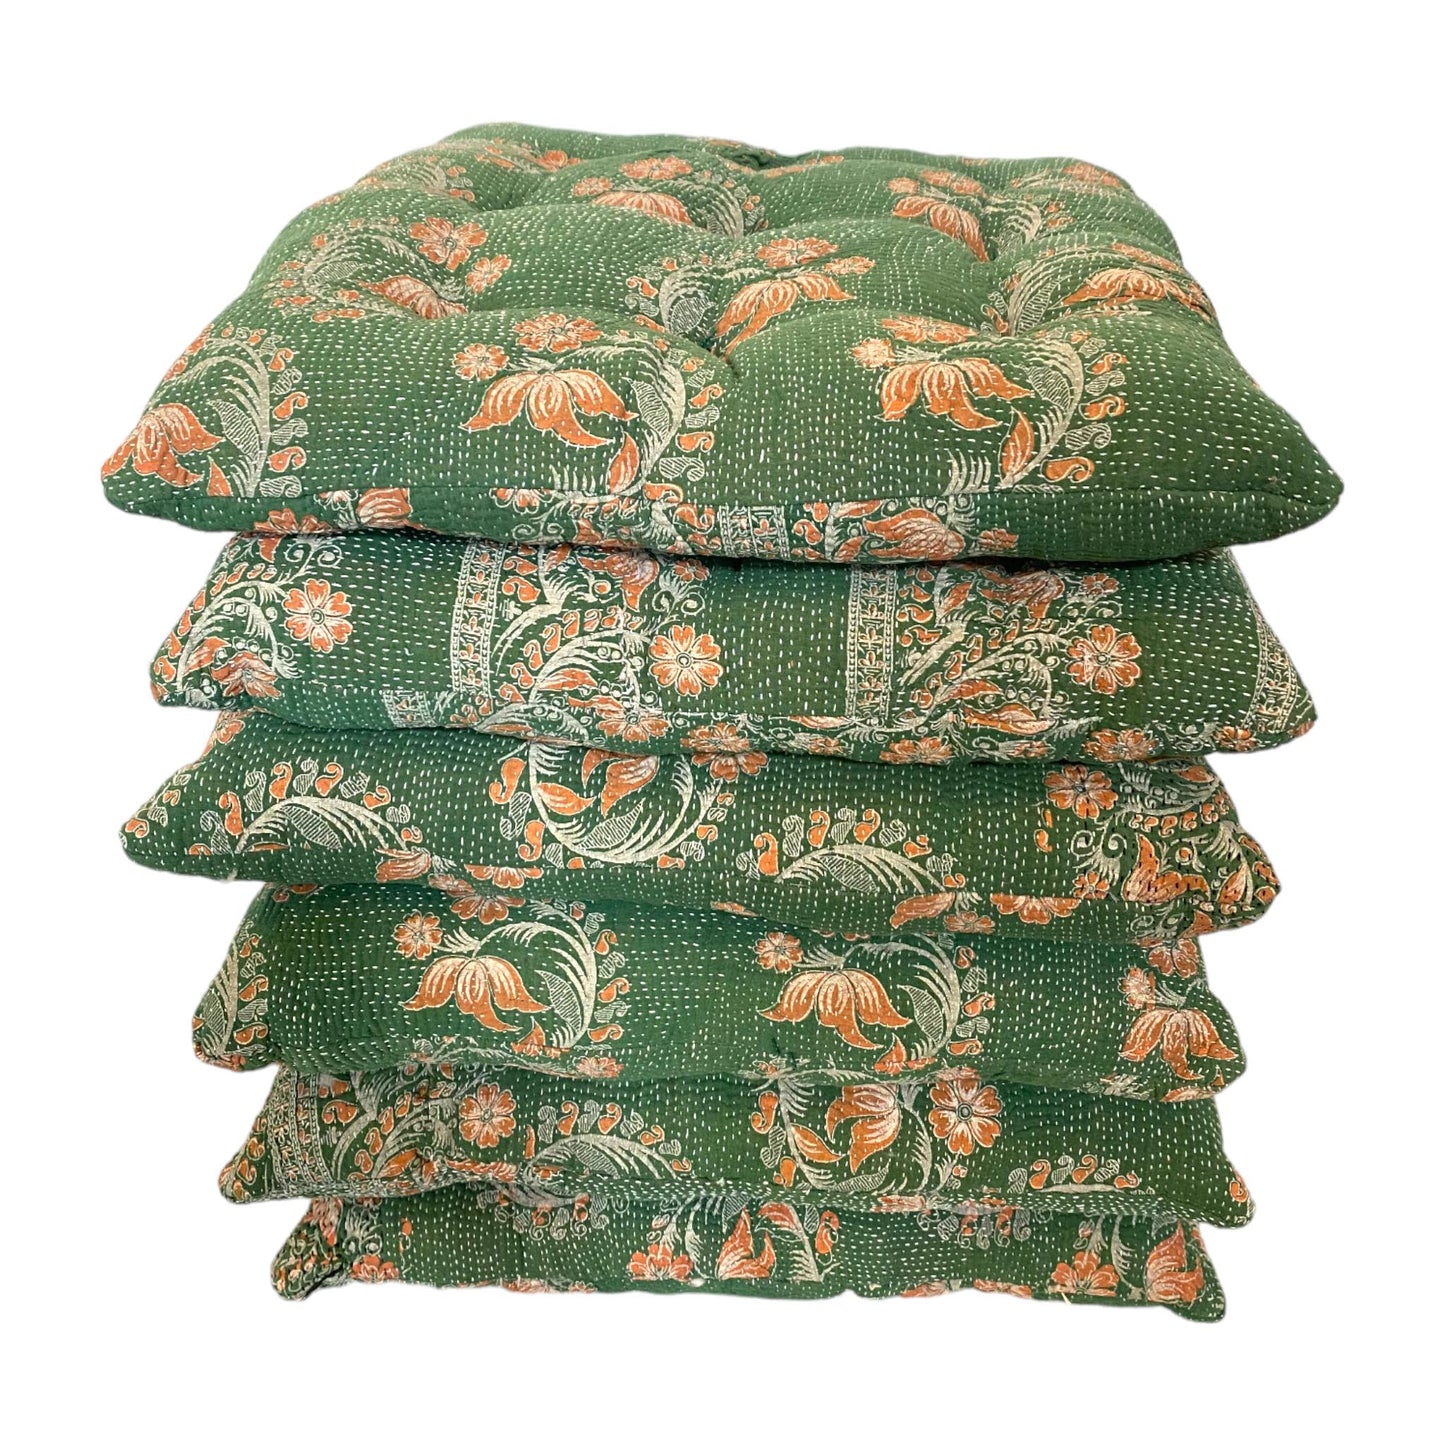 Green floral kantha seat cushions